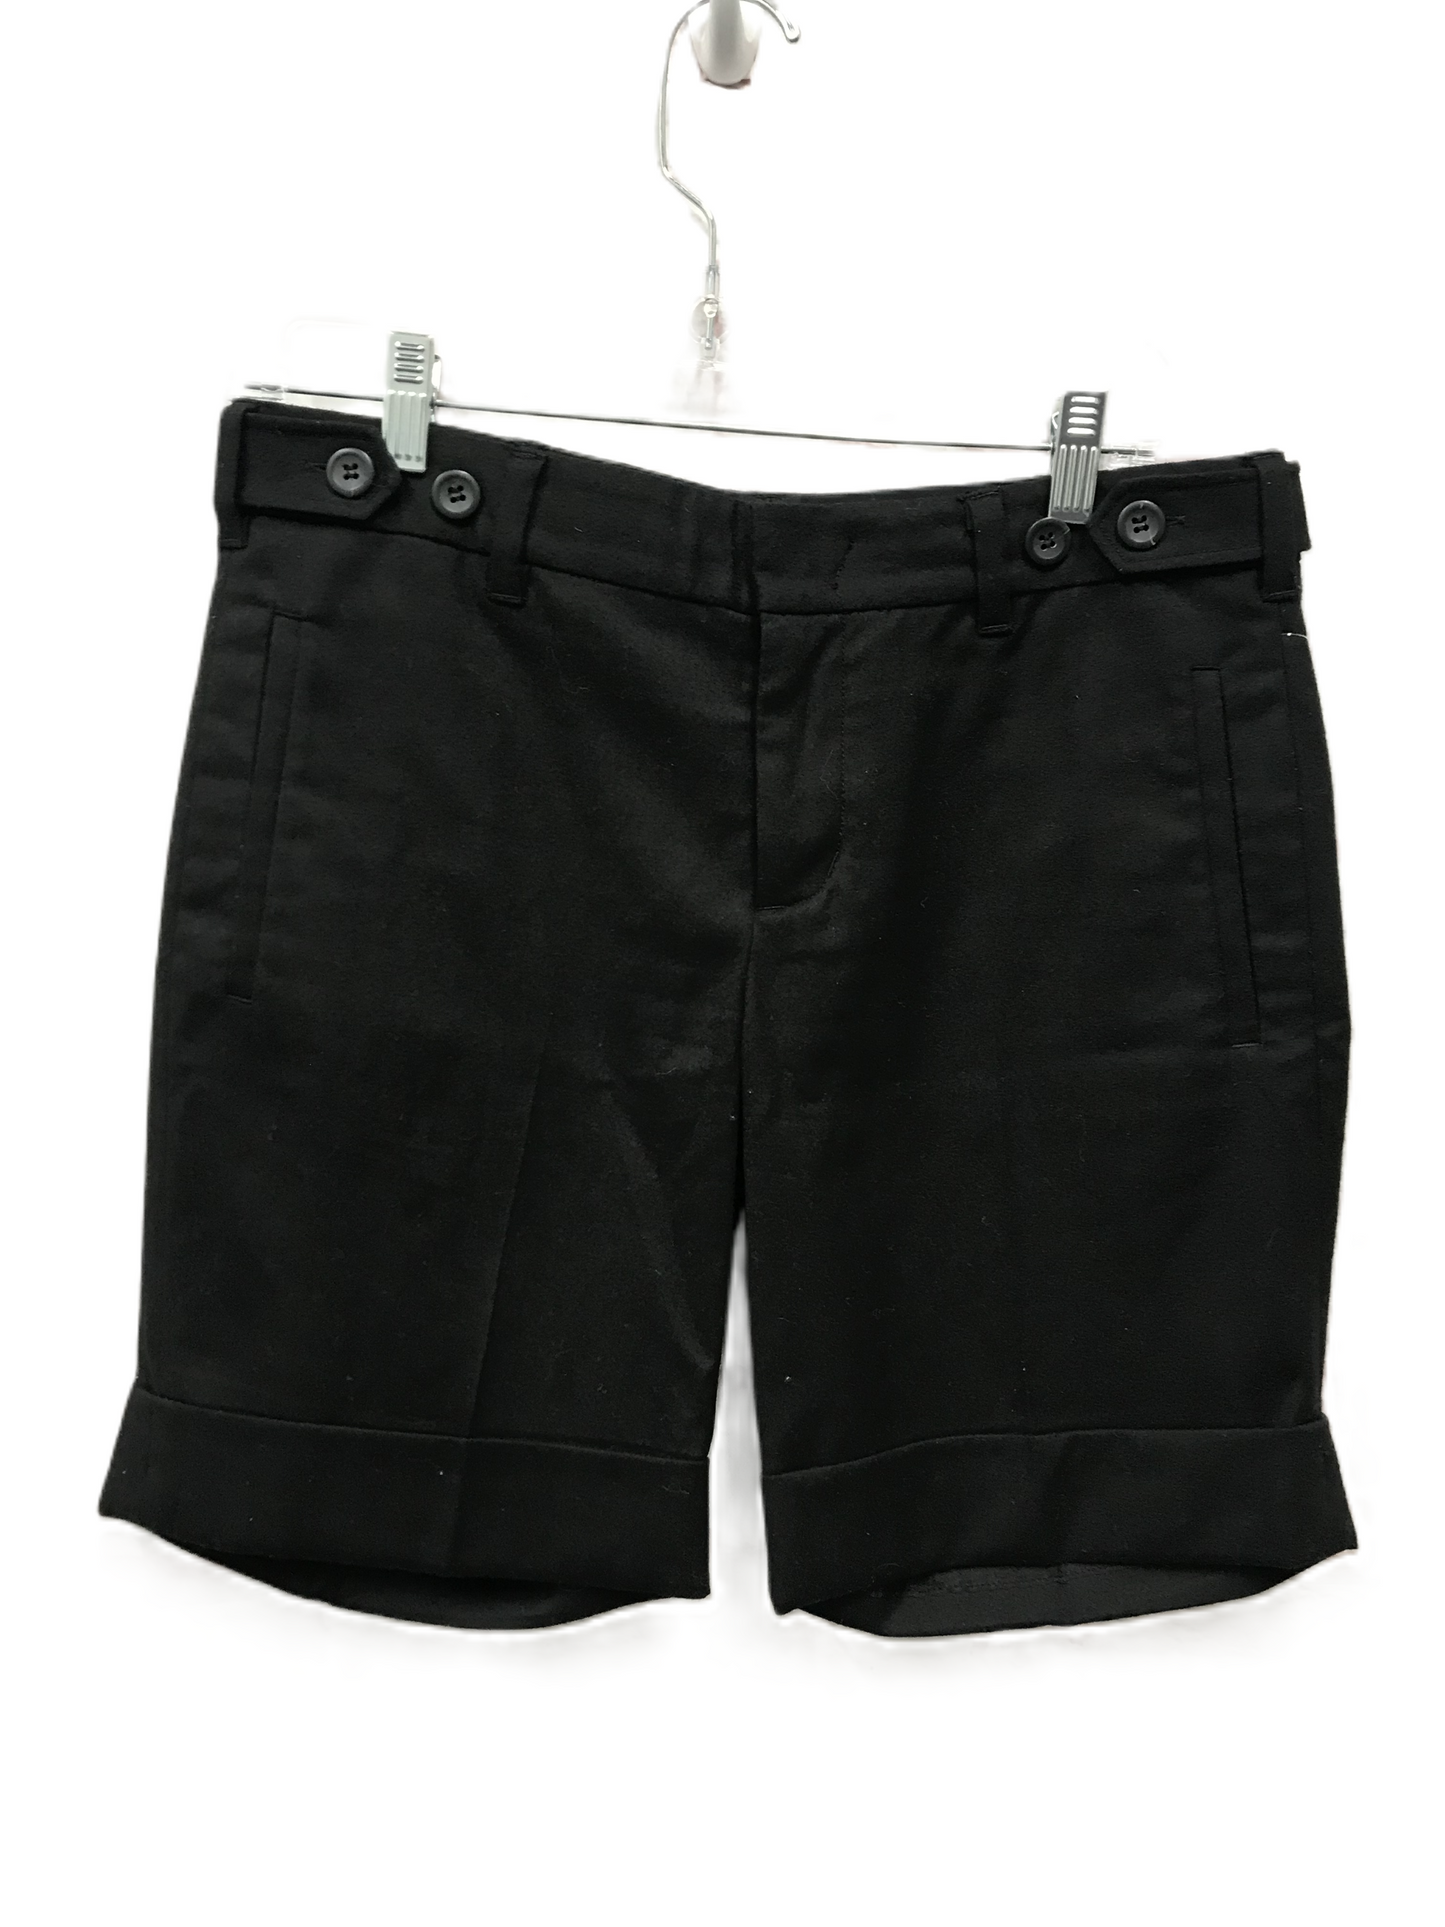 Black Shorts By Vince, Size: 4